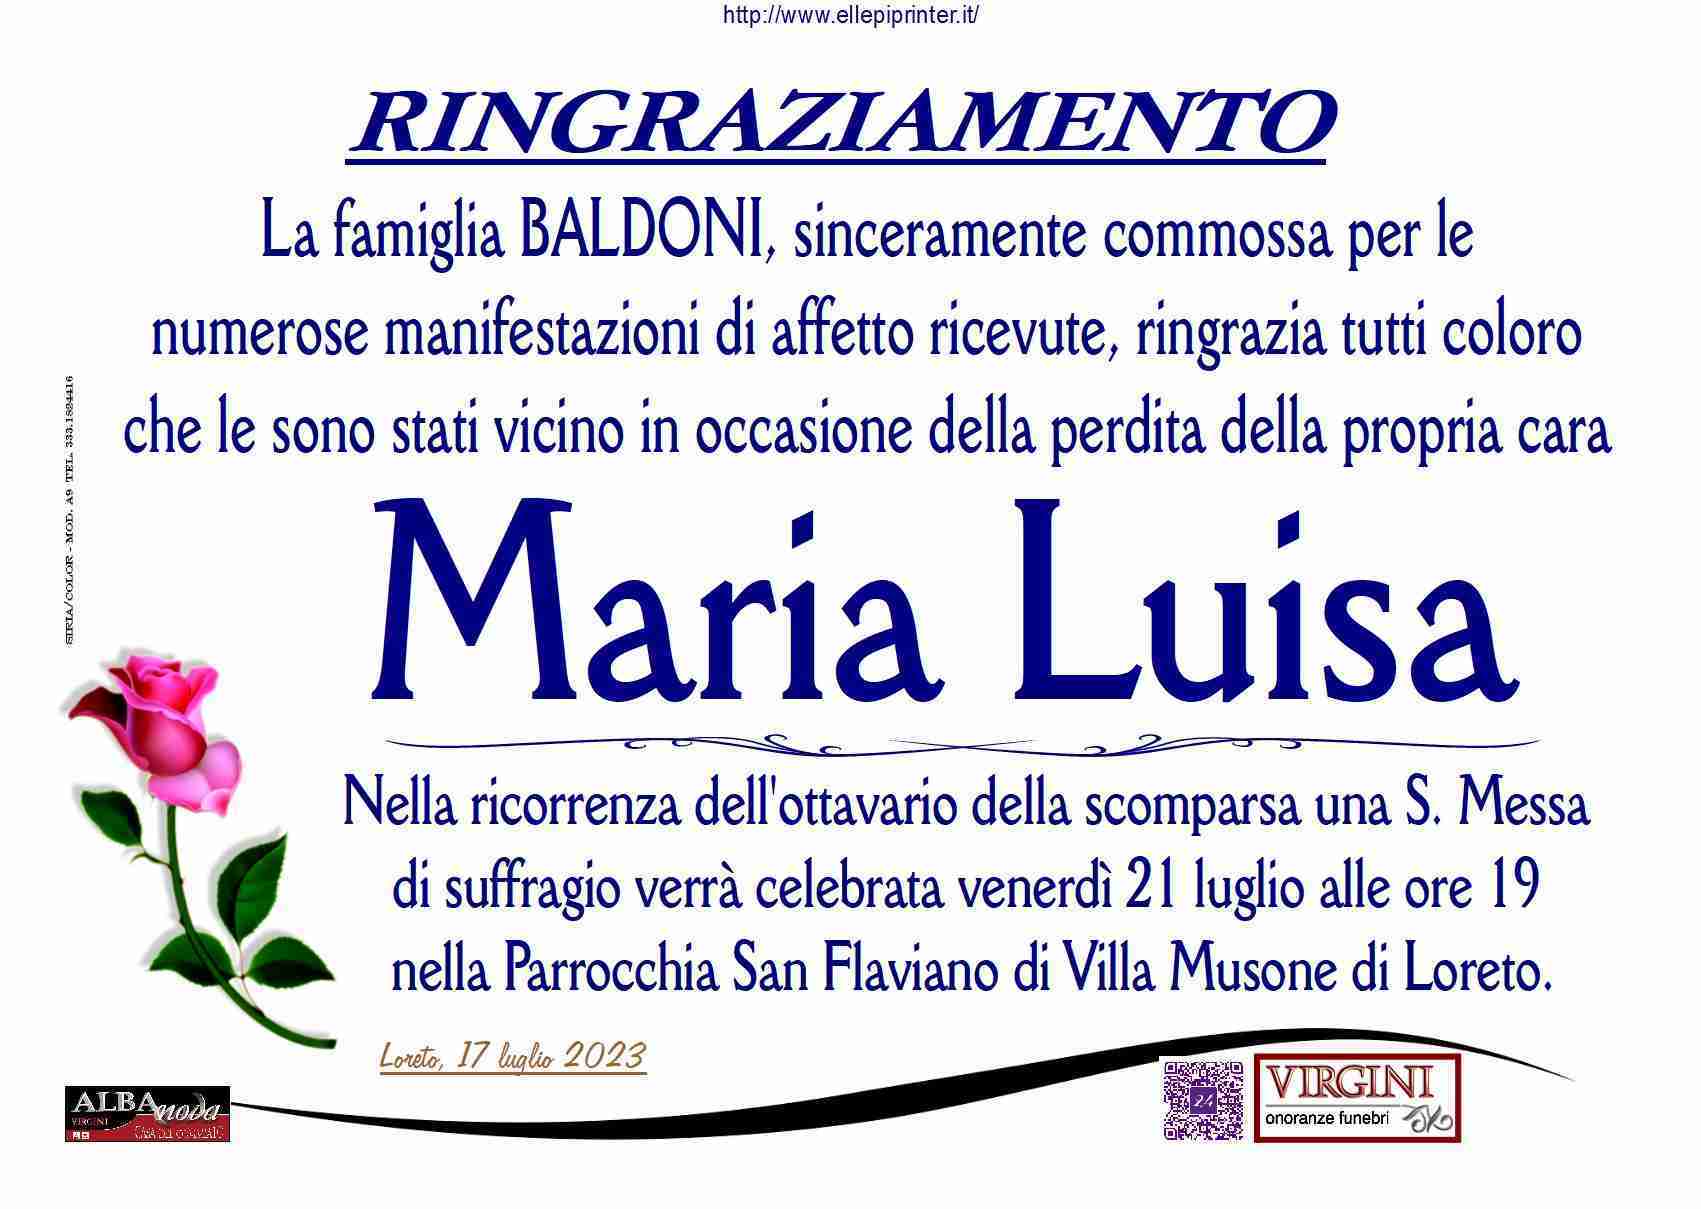 Maria Luisa Baldoni